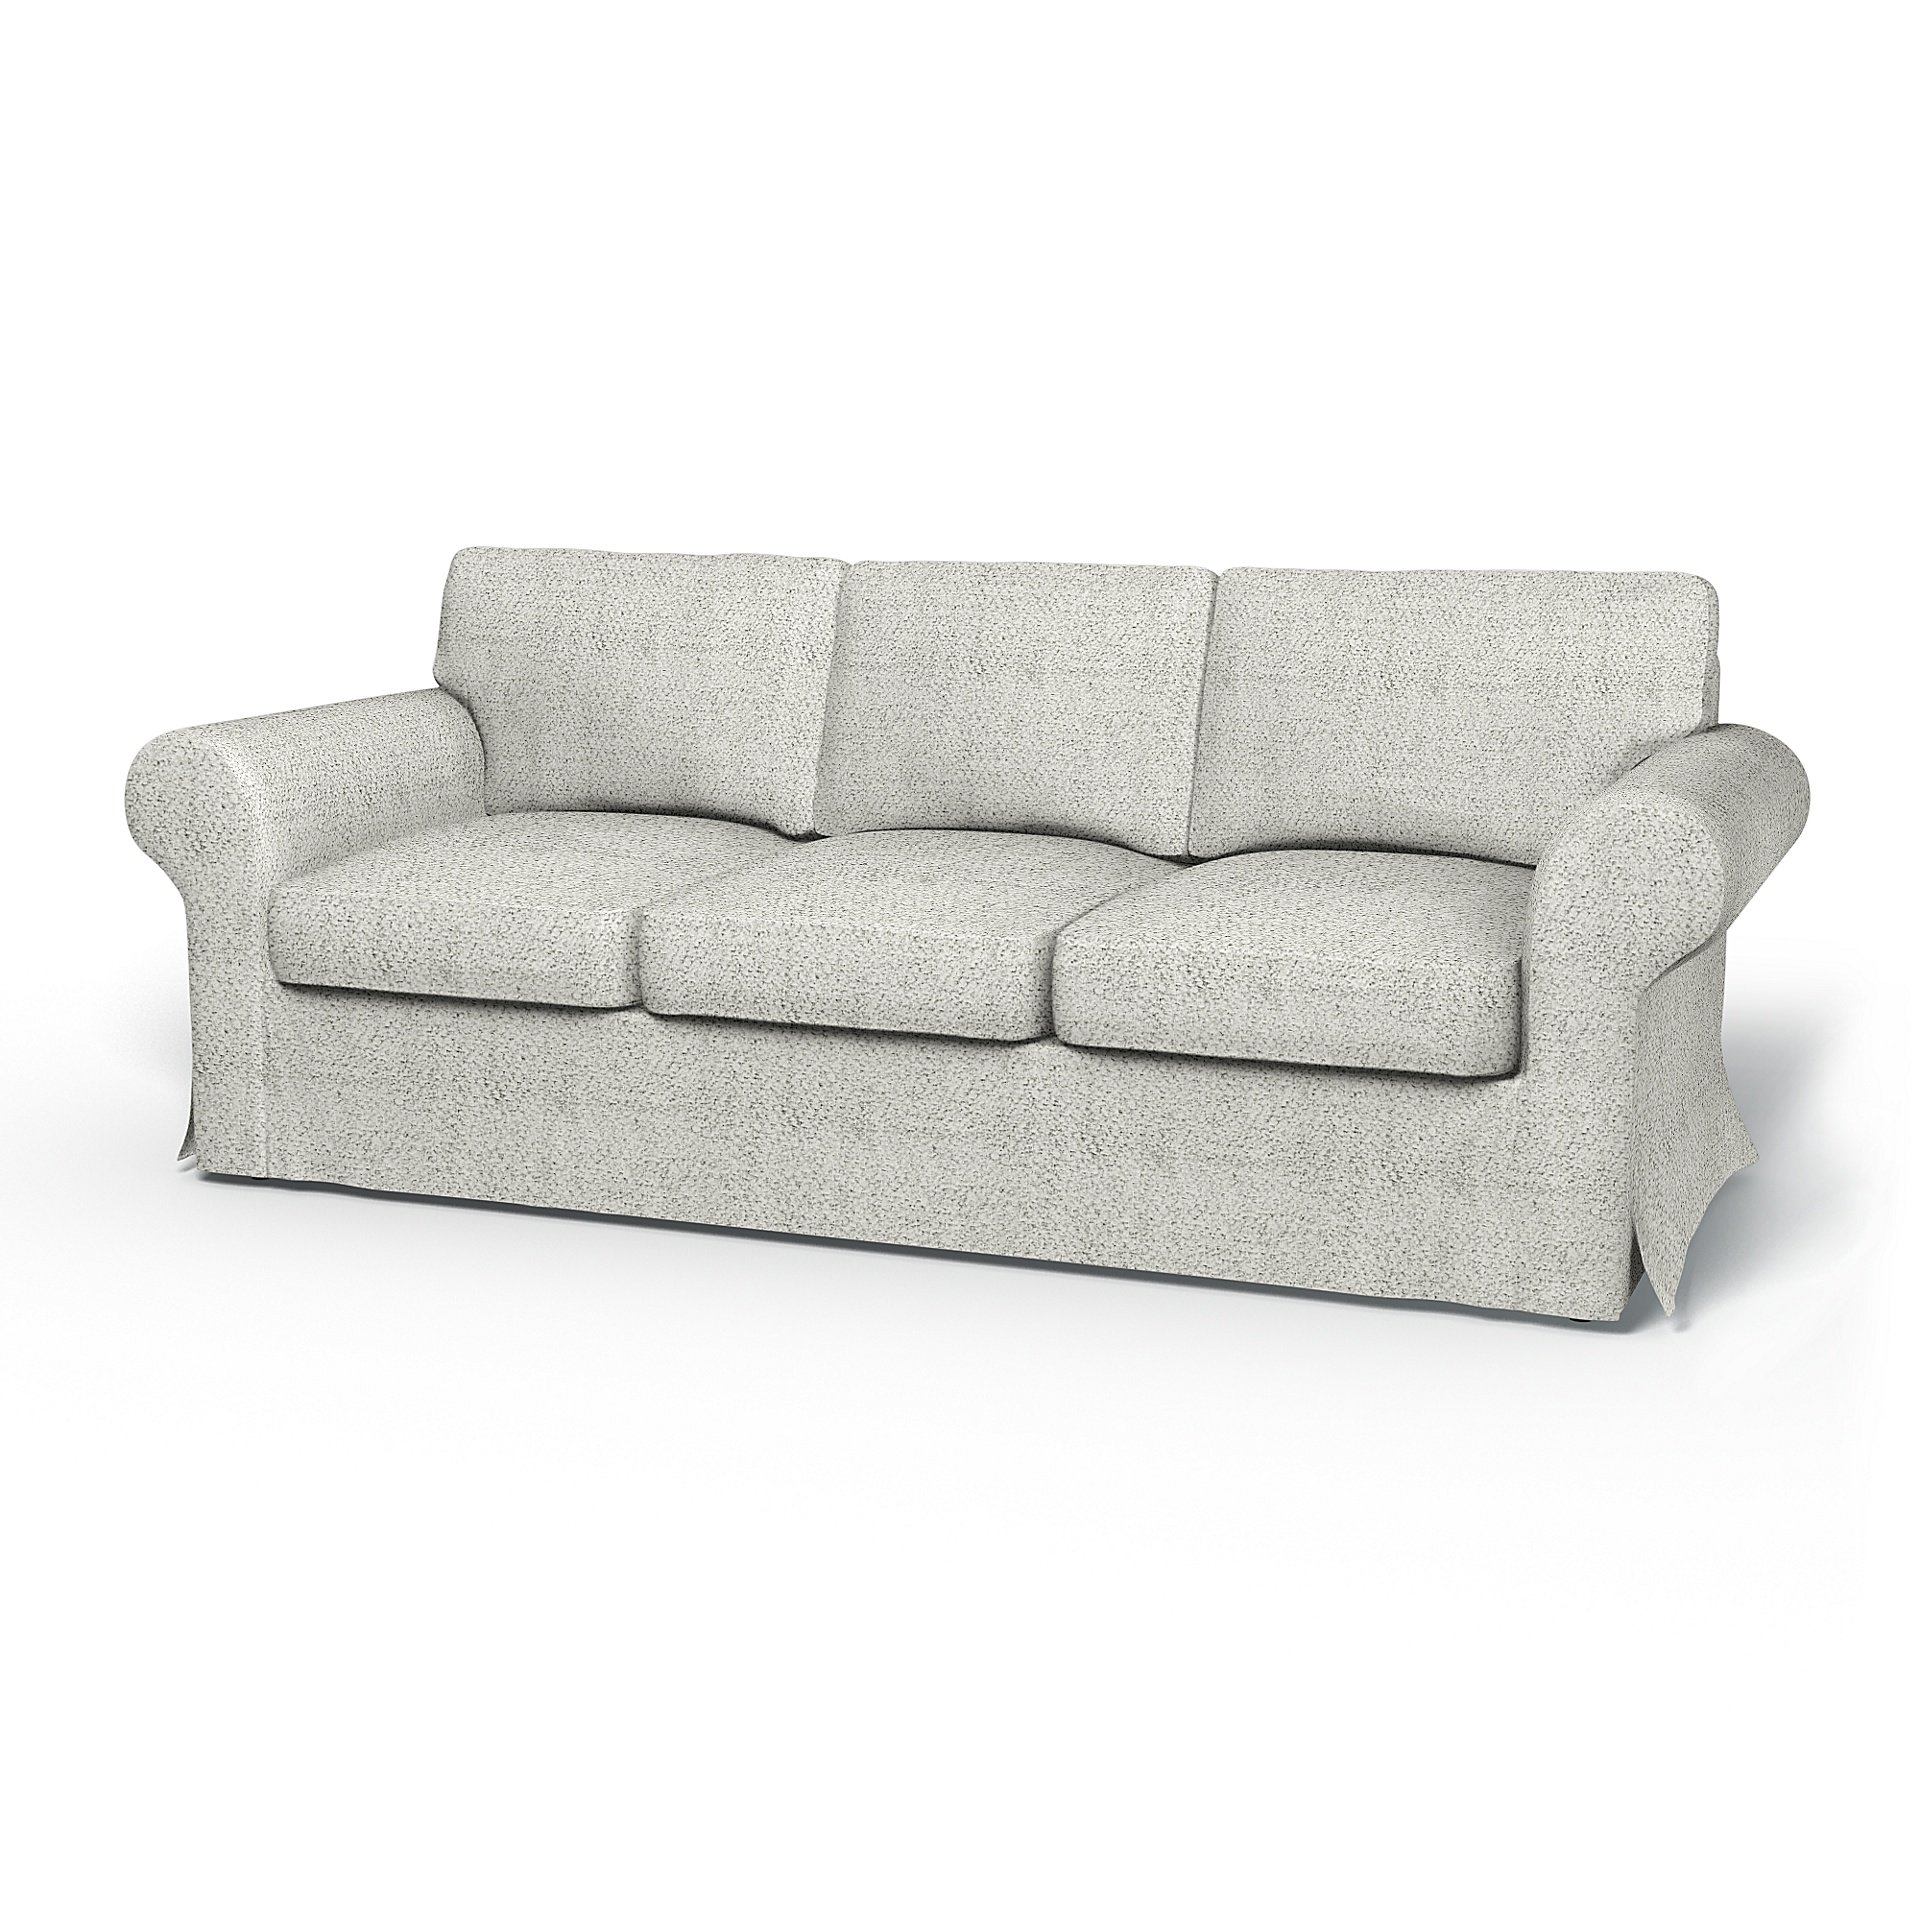 IKEA - Ektorp 3 Seater Sofa Bed Cover, Ivory, Boucle & Texture - Bemz